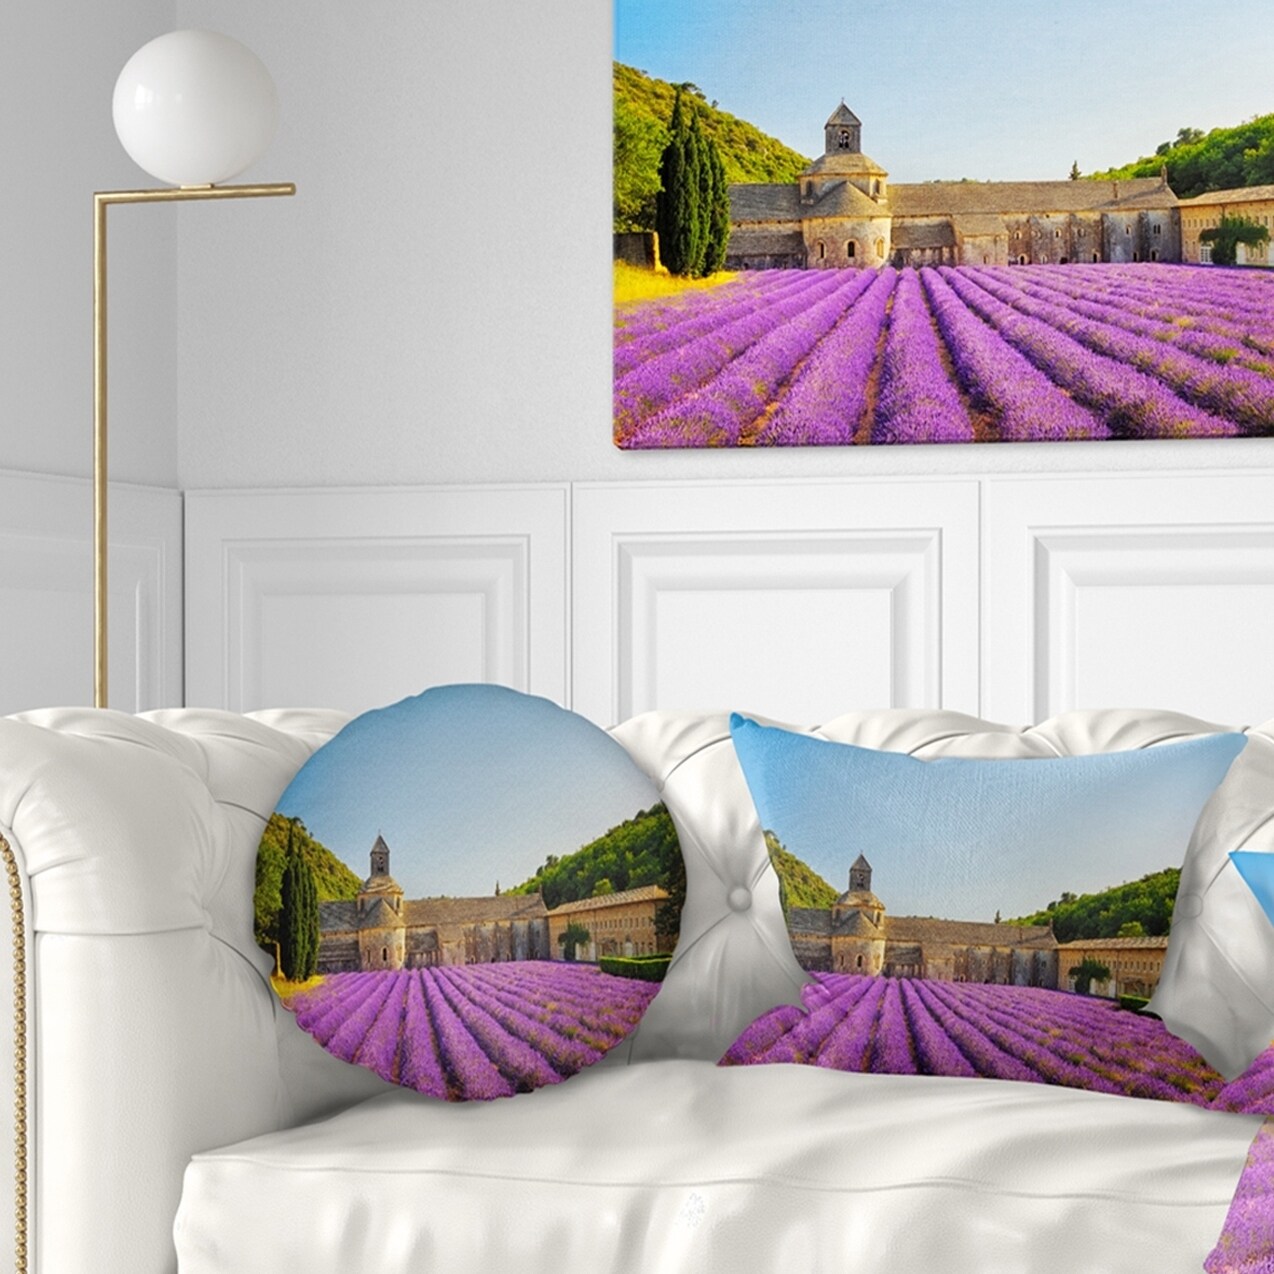 https://ak1.ostkcdn.com/images/products/20944623/Designart-Abbey-of-Senanque-Lavender-Flowers-Landscape-Wall-Throw-Pillow-dfe87d1b-edec-4e63-9d49-5290dcd057cc.jpg